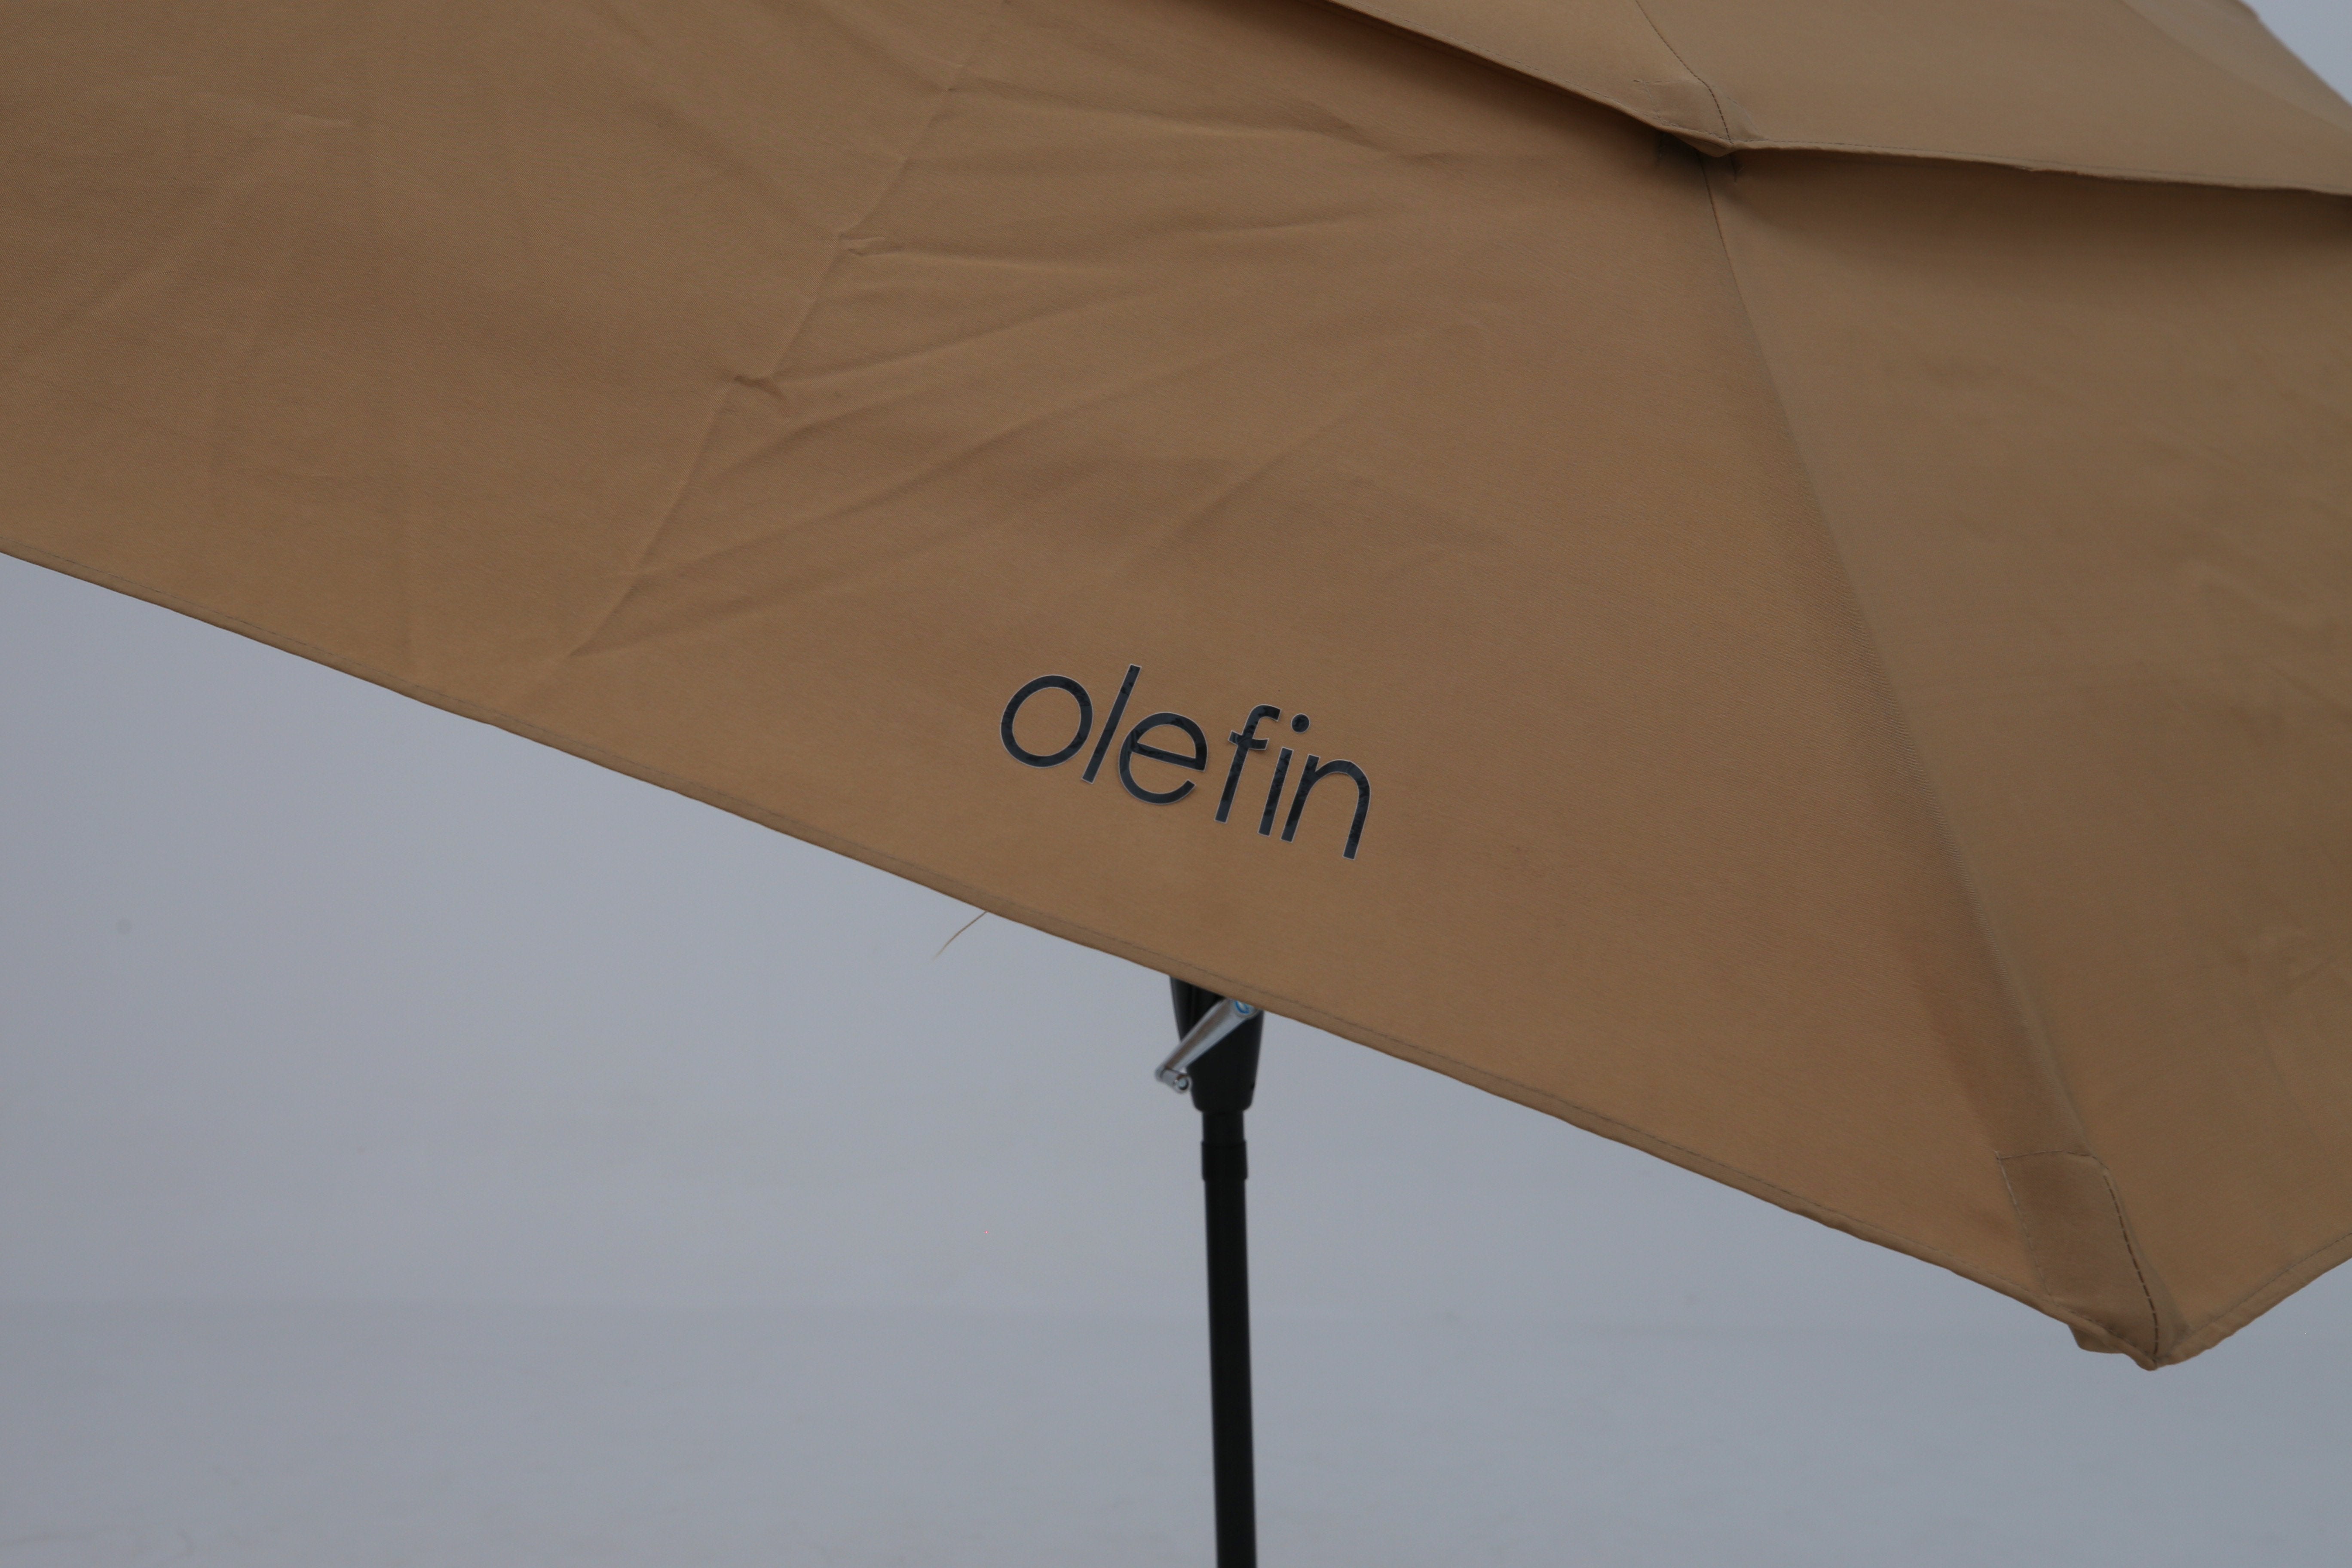 Olefin 3 Tiers Market Umbrella Patio Umbrella - ABC-CANOPY